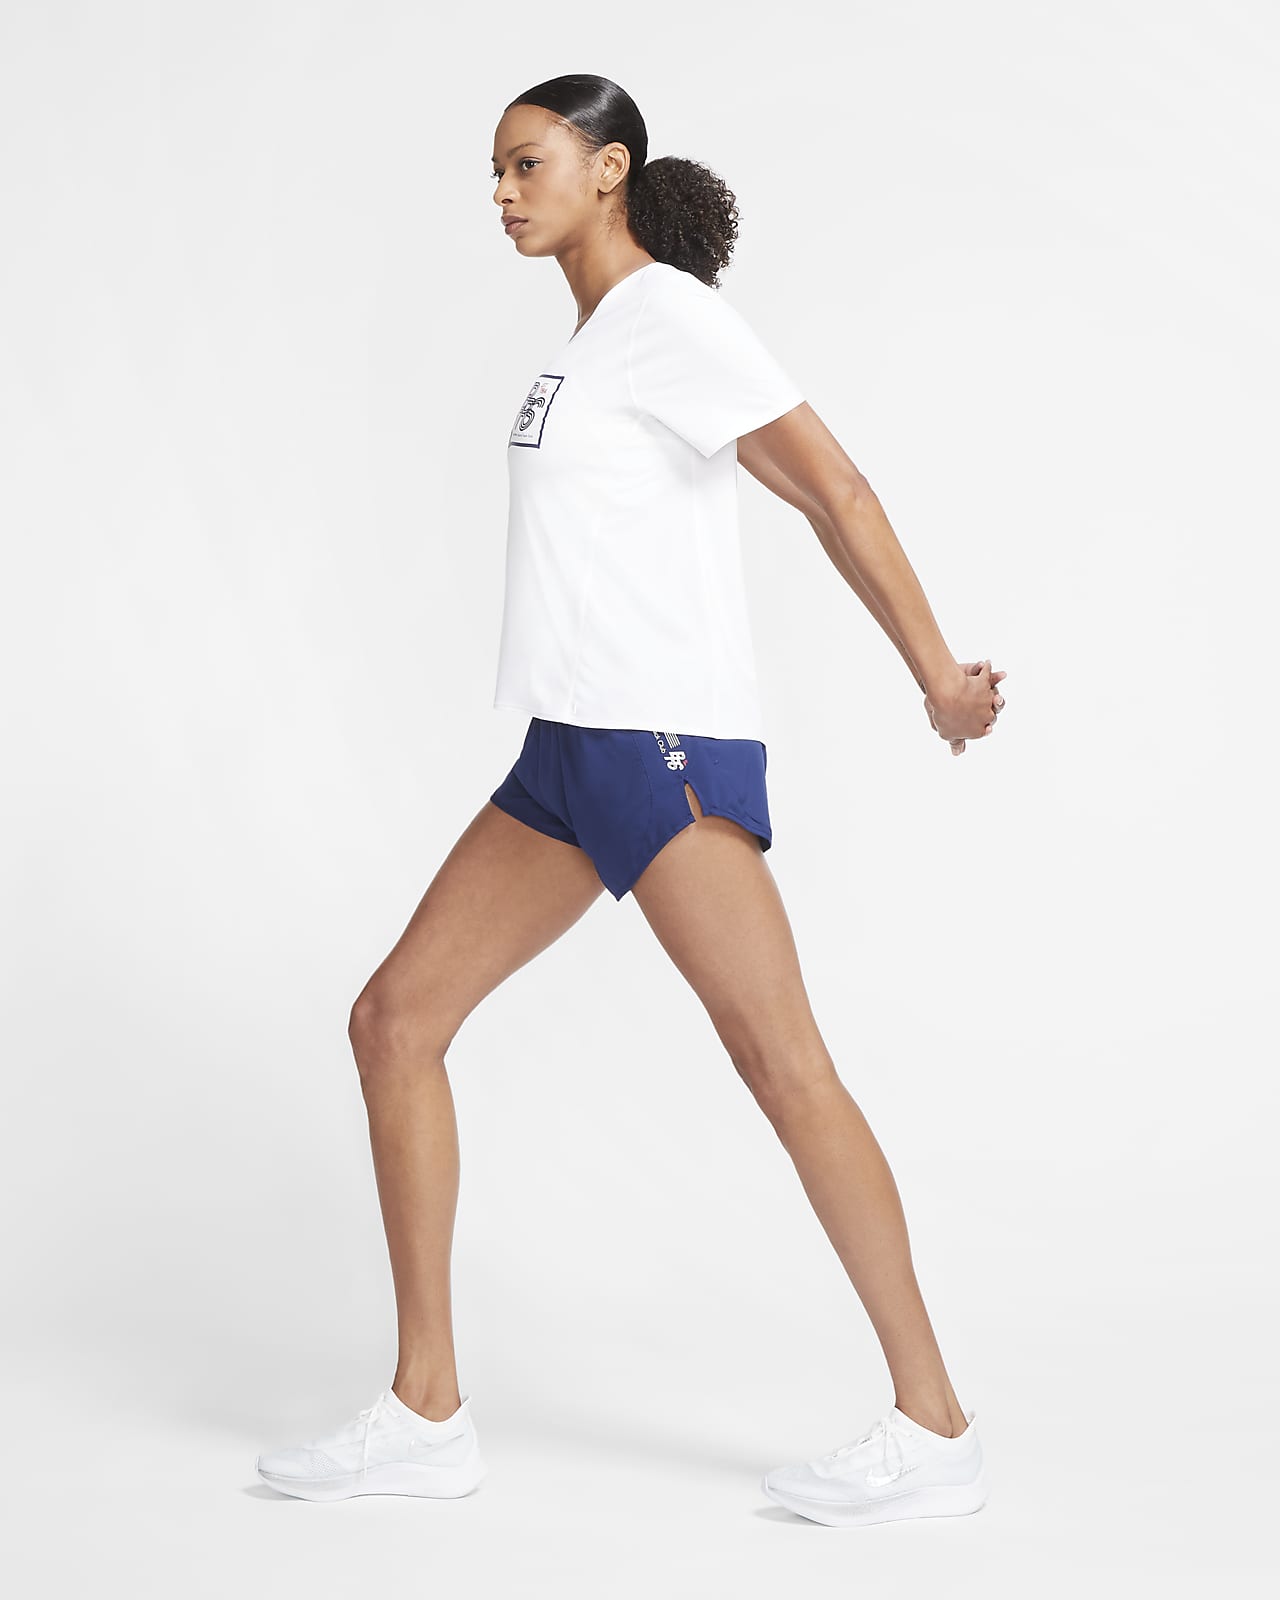 Nike Running Shorts, Nike Women's Sports Shorts